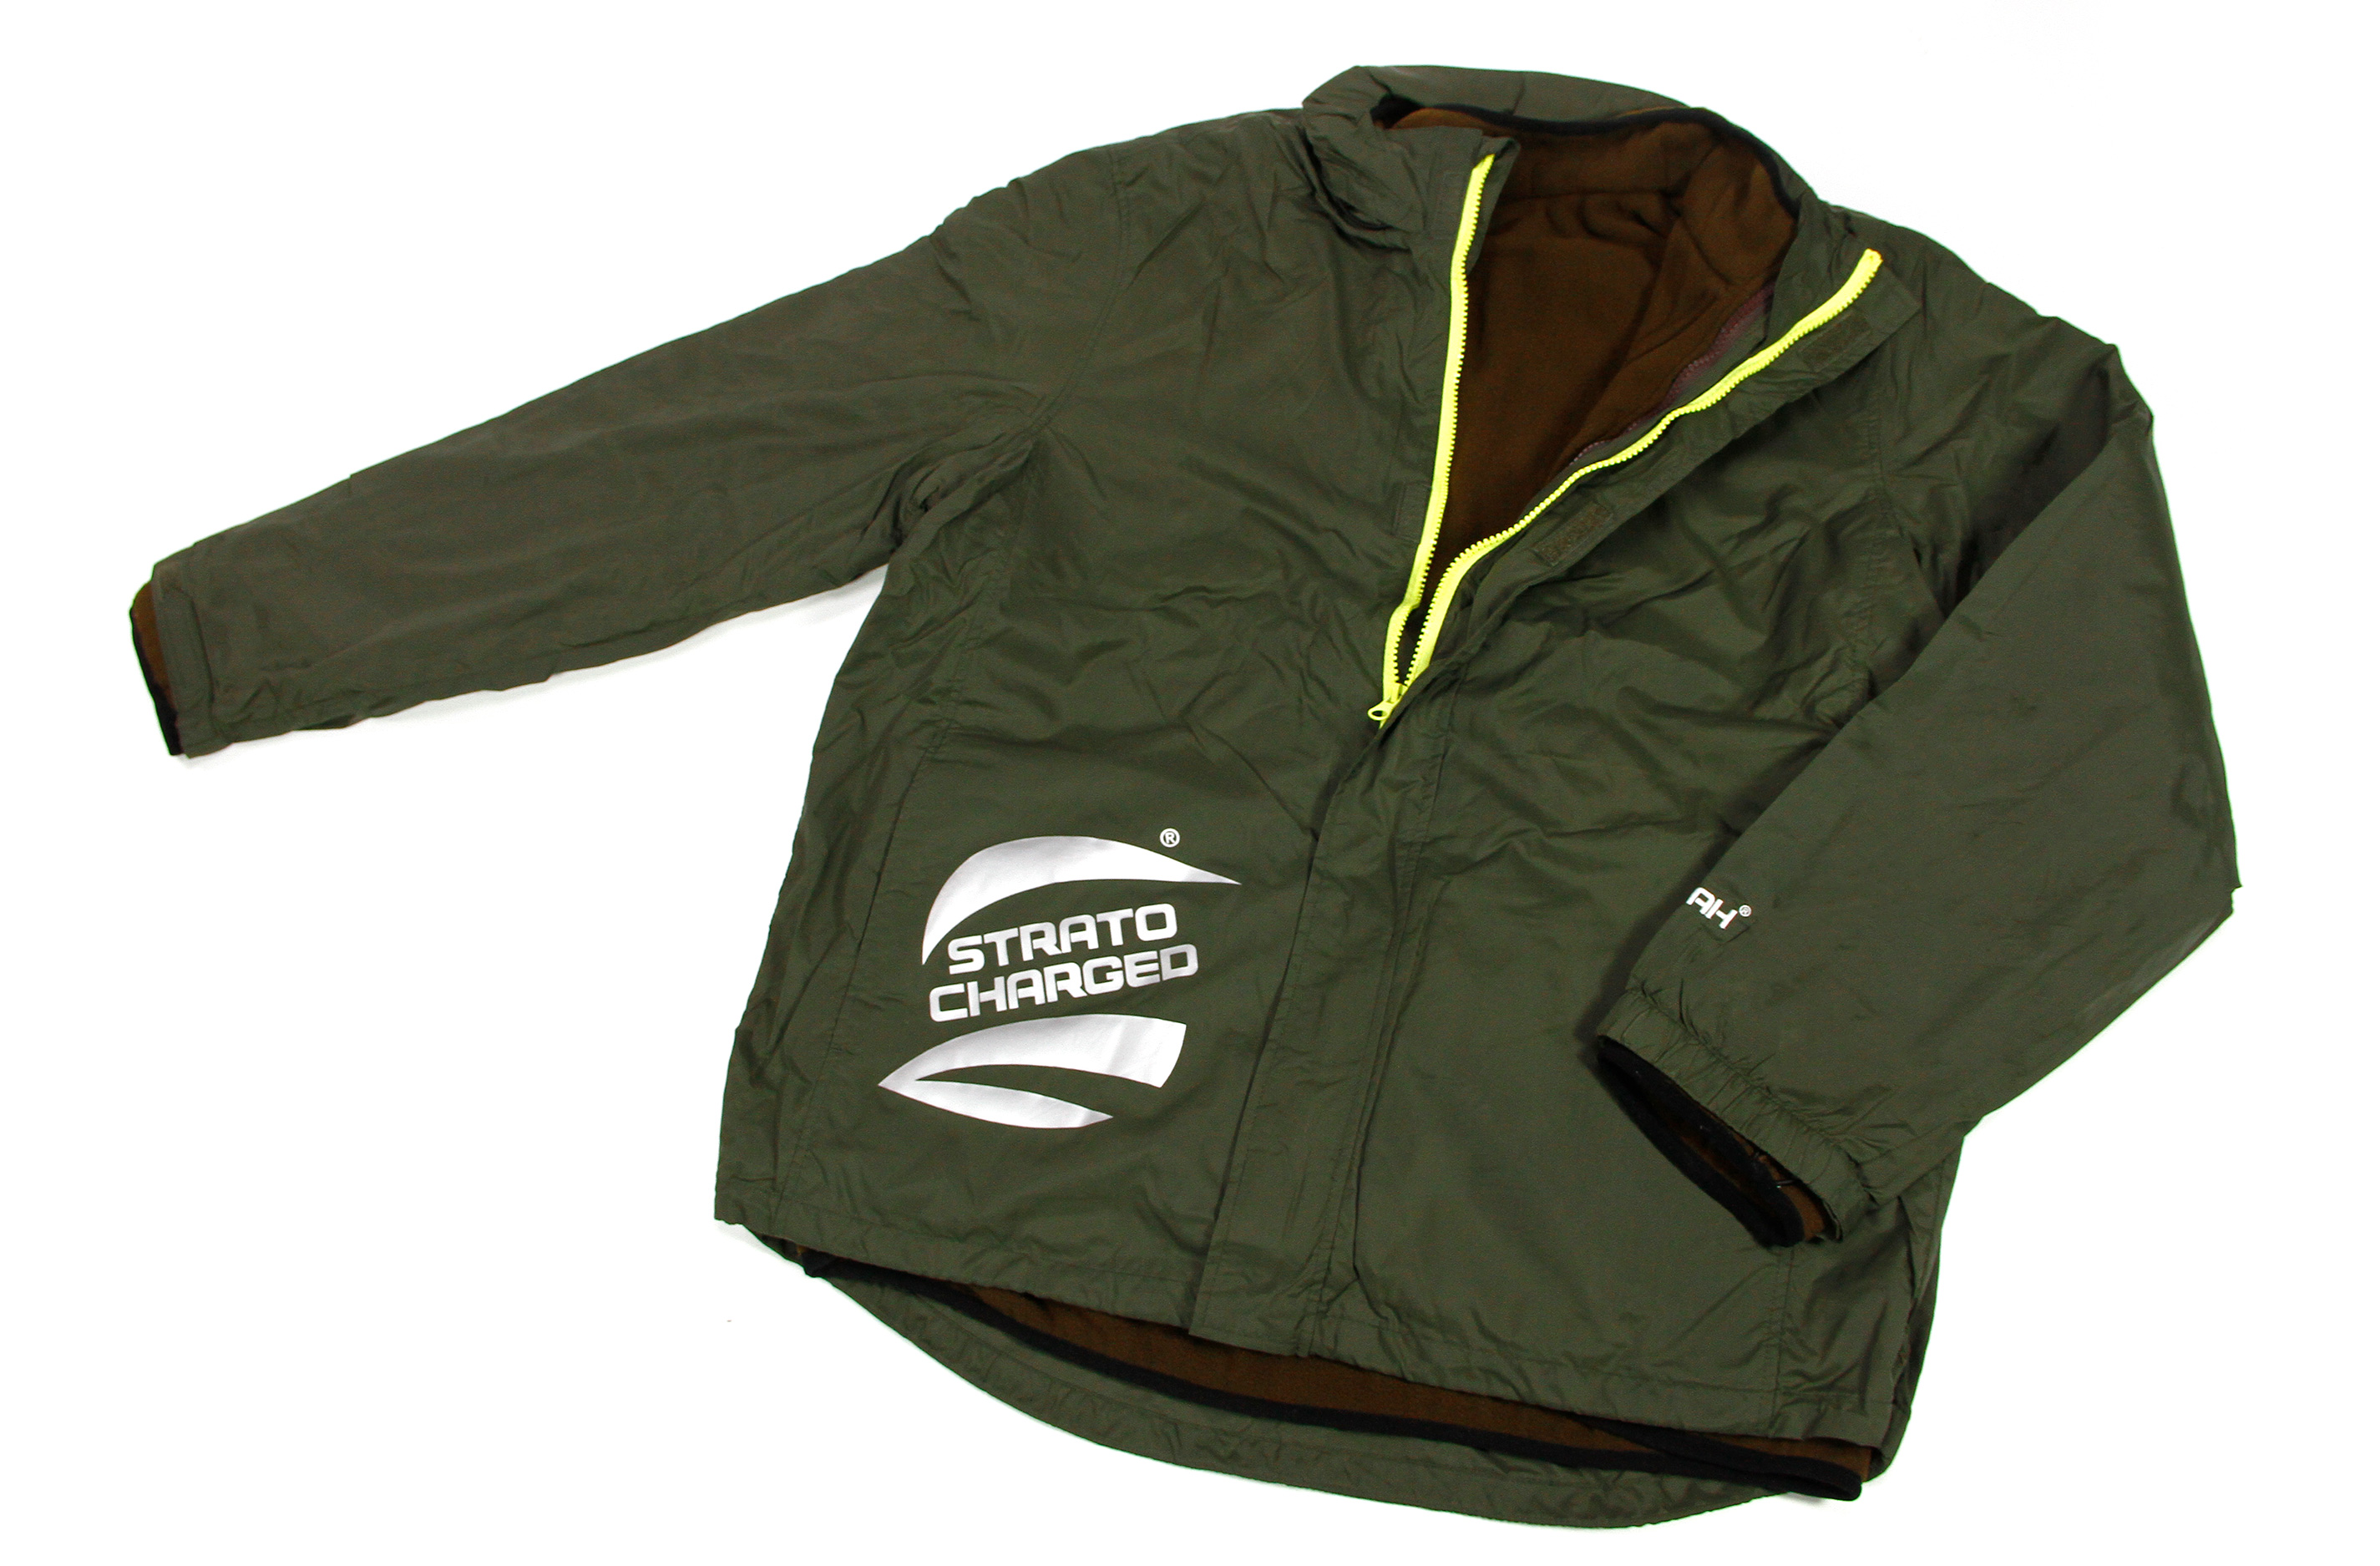 y1392/03 Zenoah weather resistant insulated winter jacket